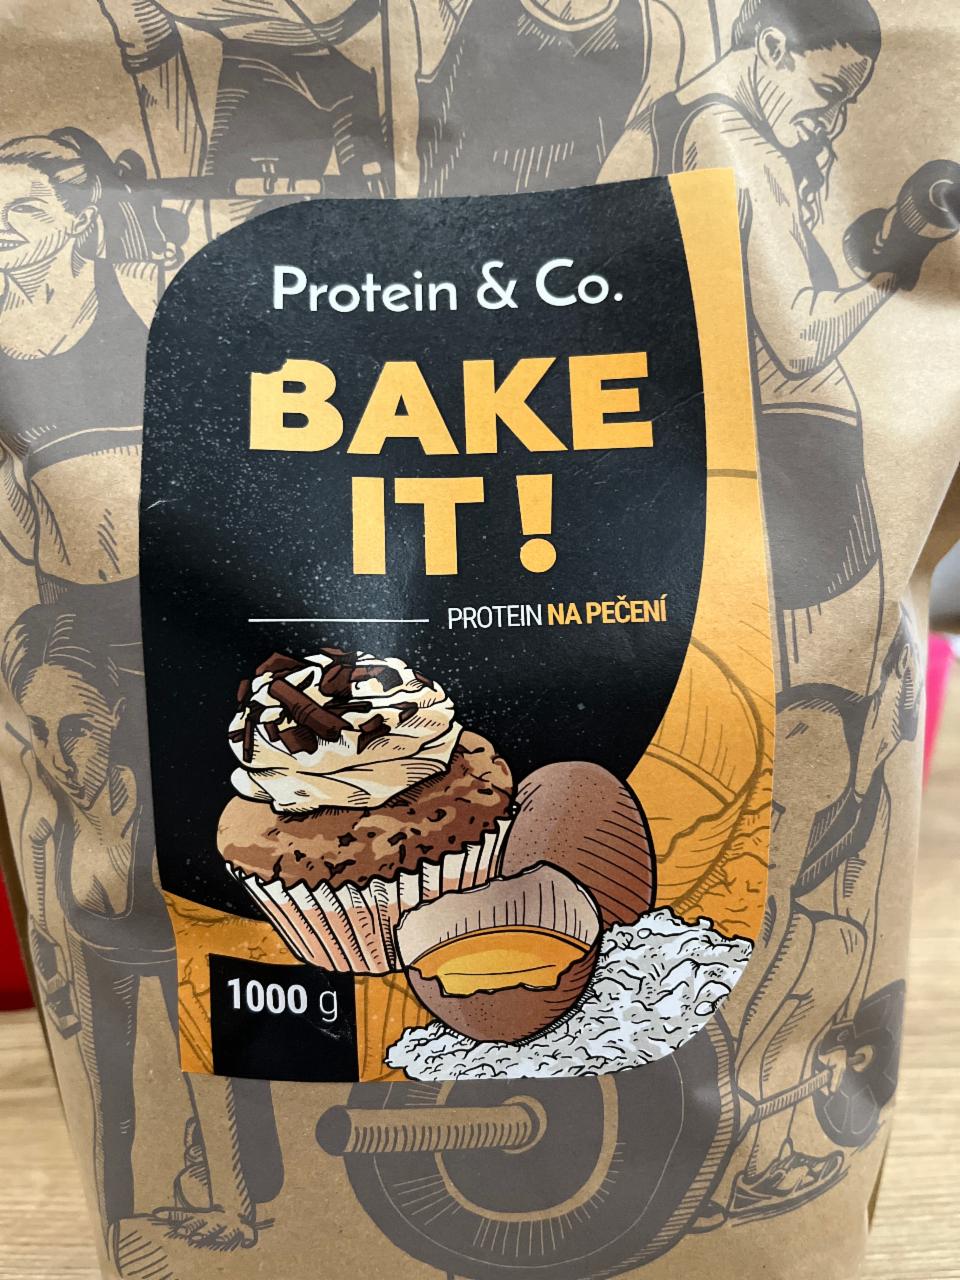 Fotografie - Bake it! Protein na pečení Protein & Co.